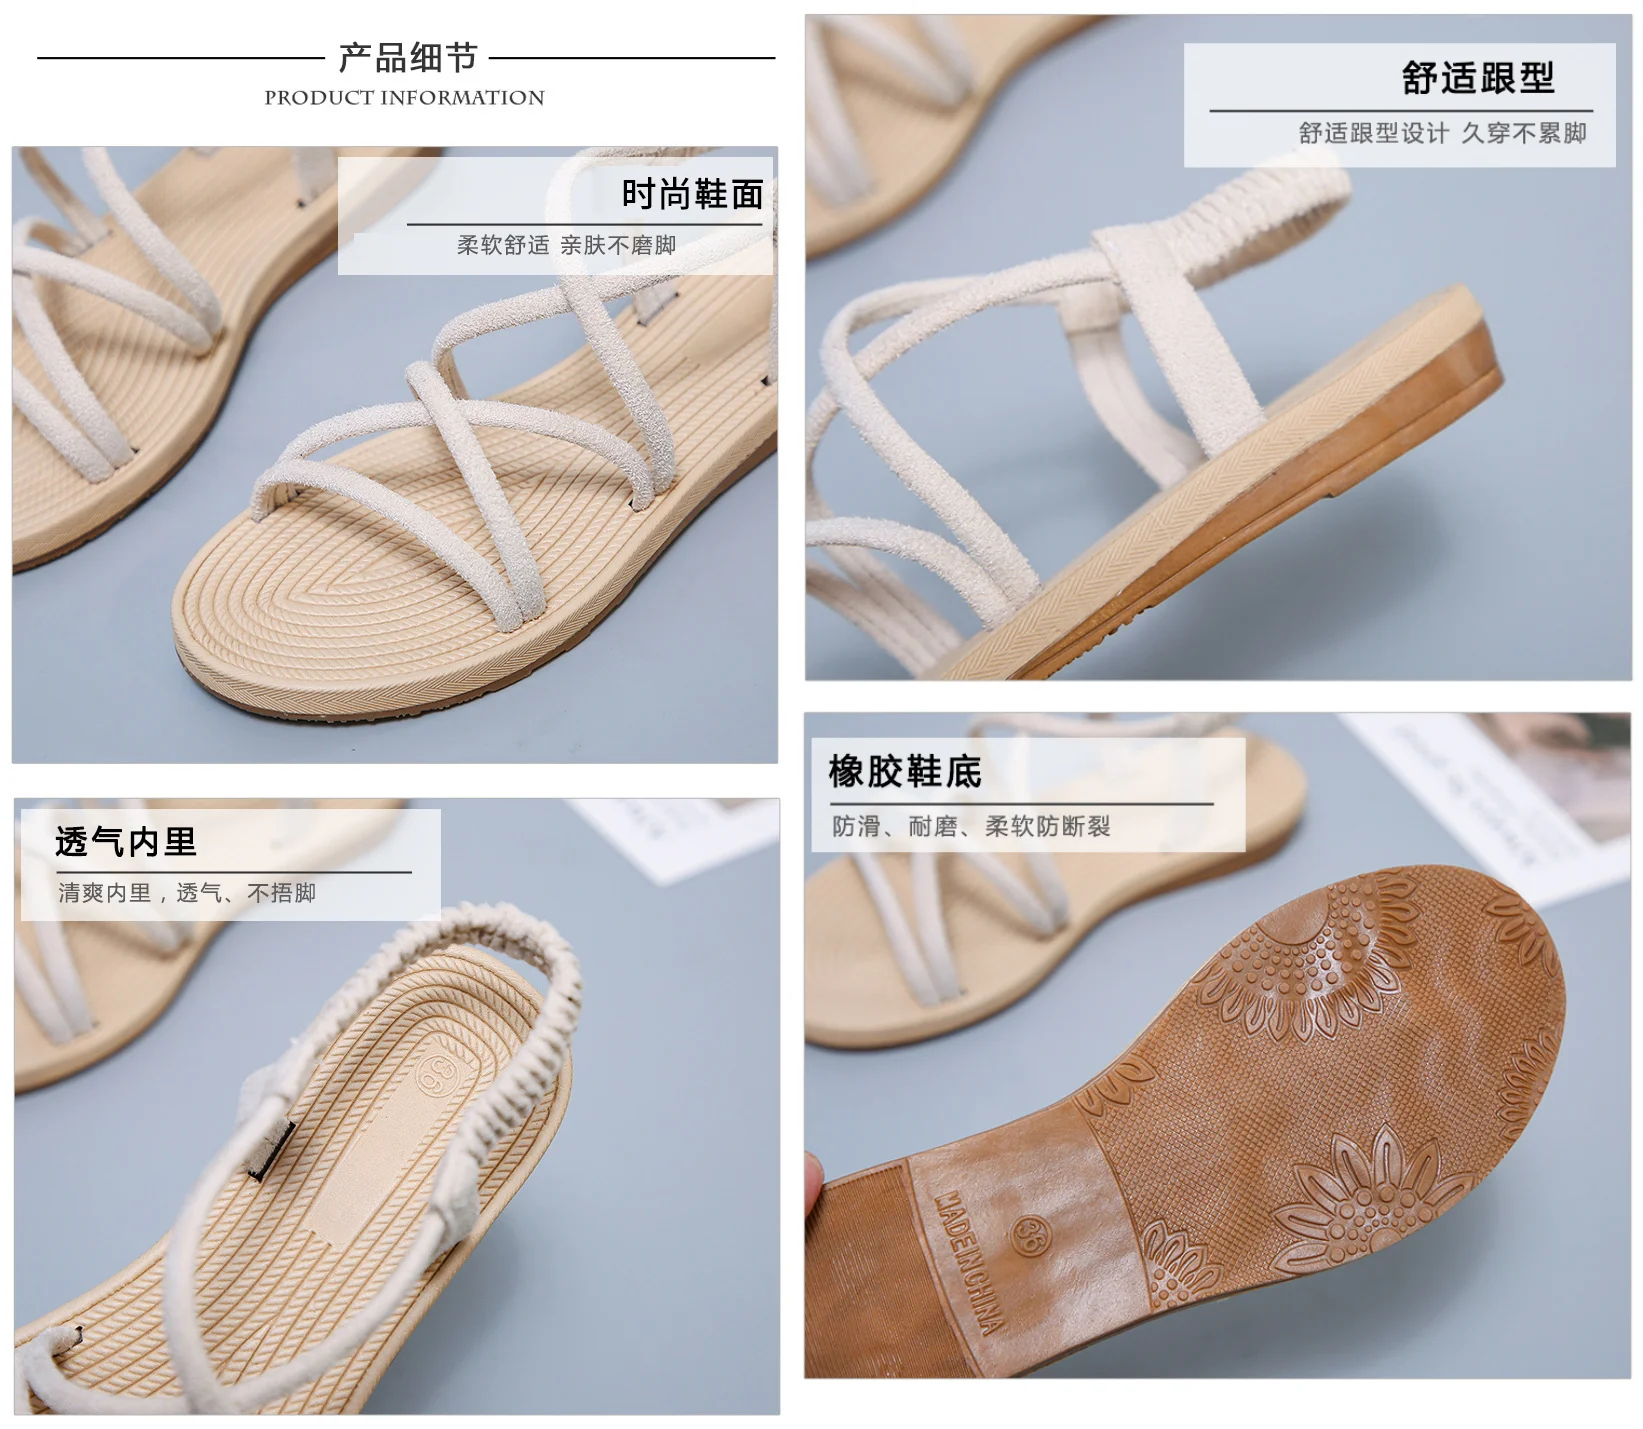 New Fashion Women's Sandals Summer Flat Sandals Comfortable Roman Women's Sandals 35-43 Large size